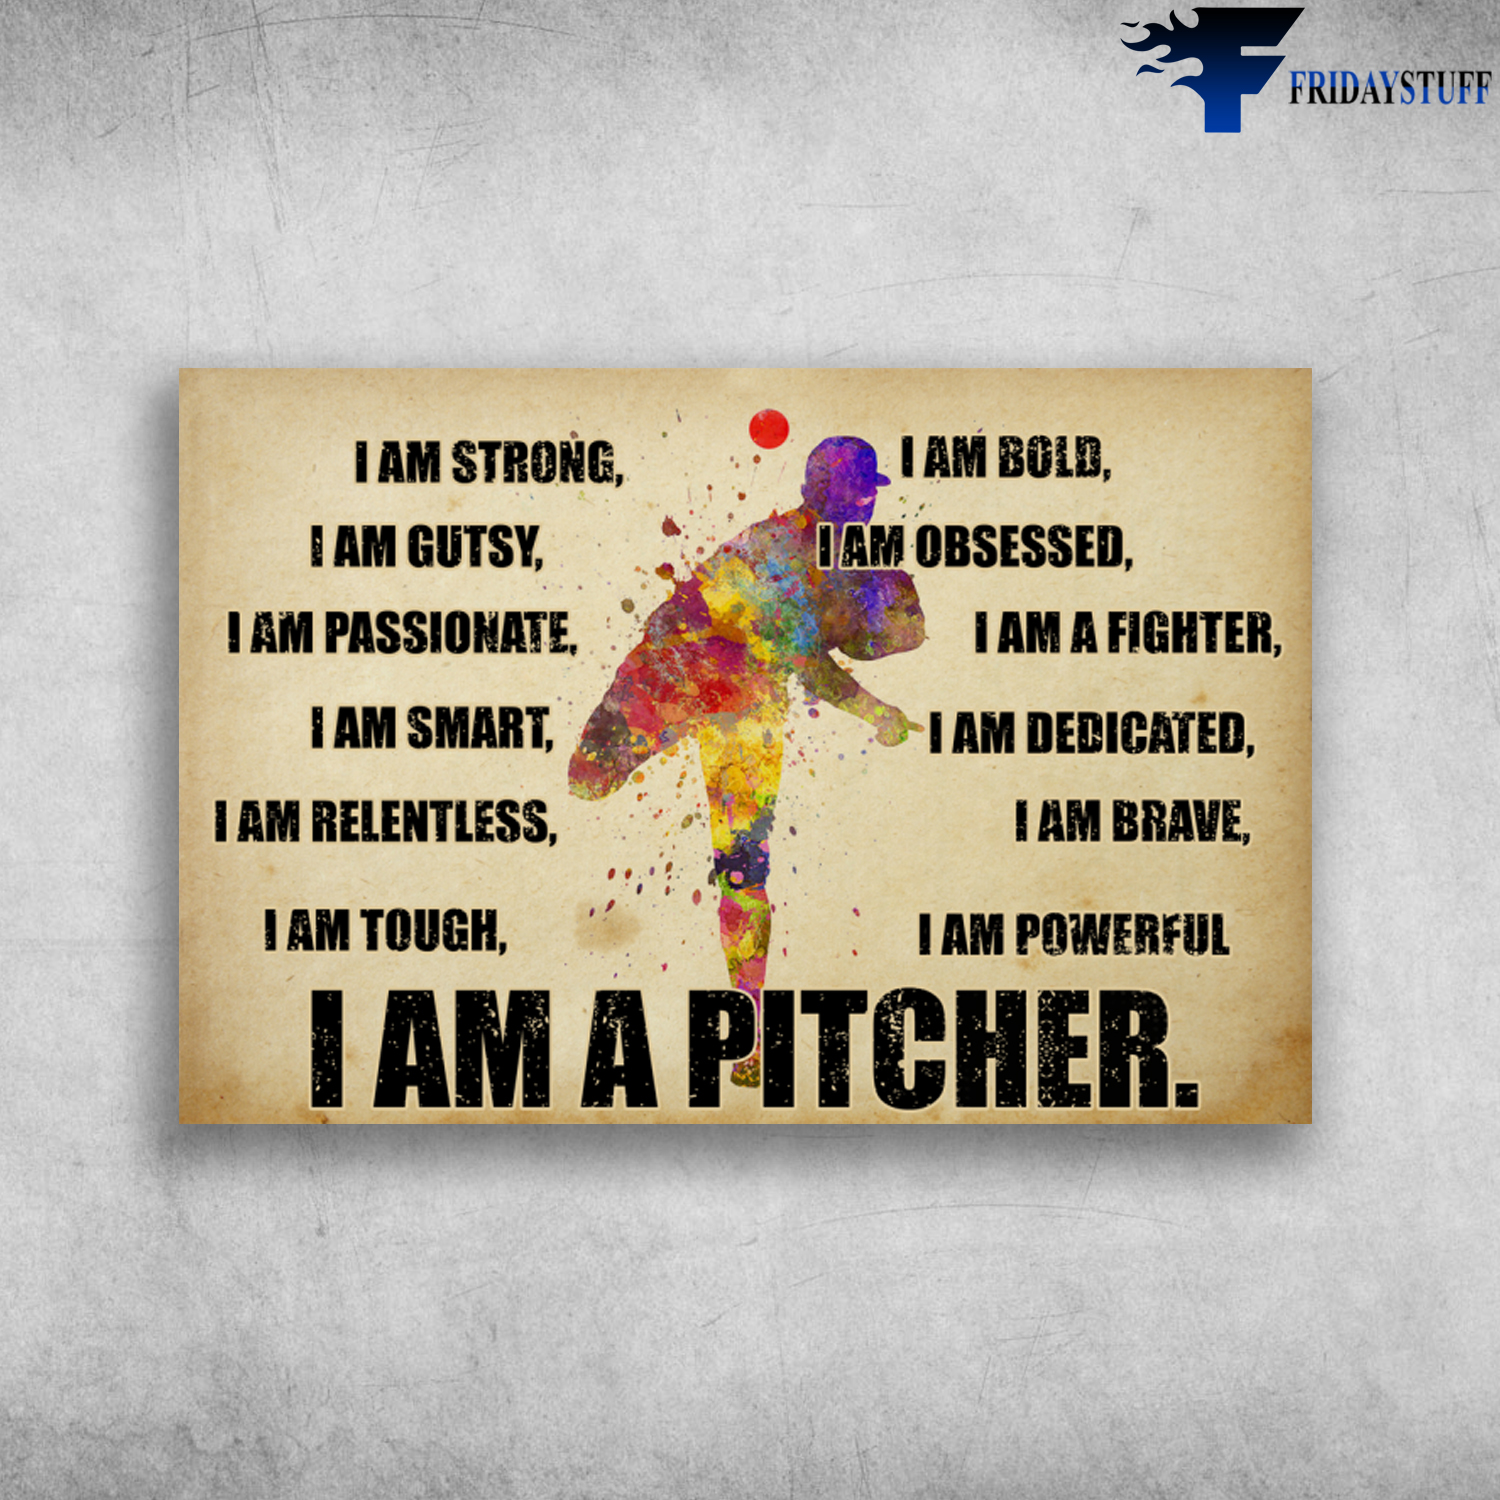 I Am A Pitcher - I Am Strong, I Am Gutsy, I Am Passionate, I Am Smart